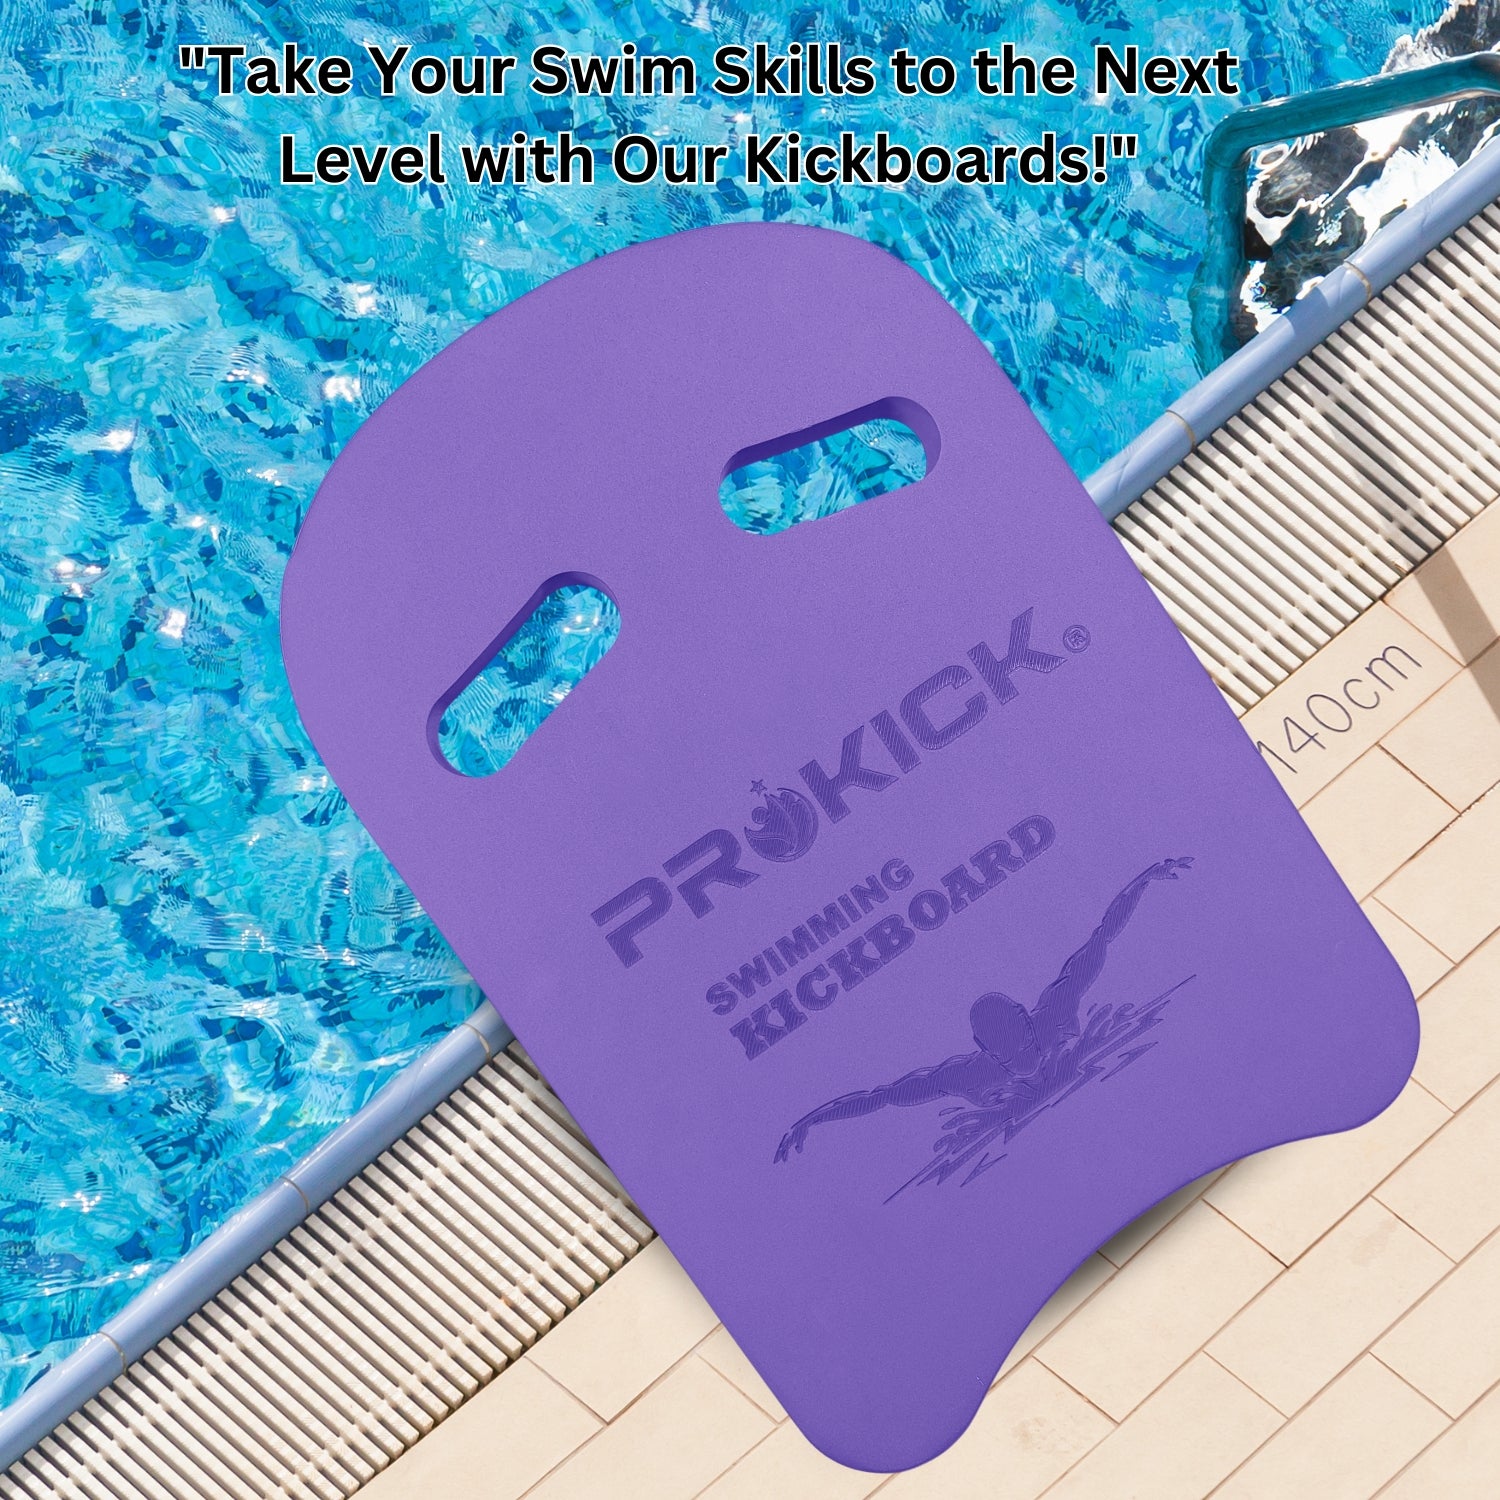 Prokick Unisex Adult Swimming Kickboard - Safe Training Aid Float Hand Board of Foam, Assorted Color - Best Price online Prokicksports.com